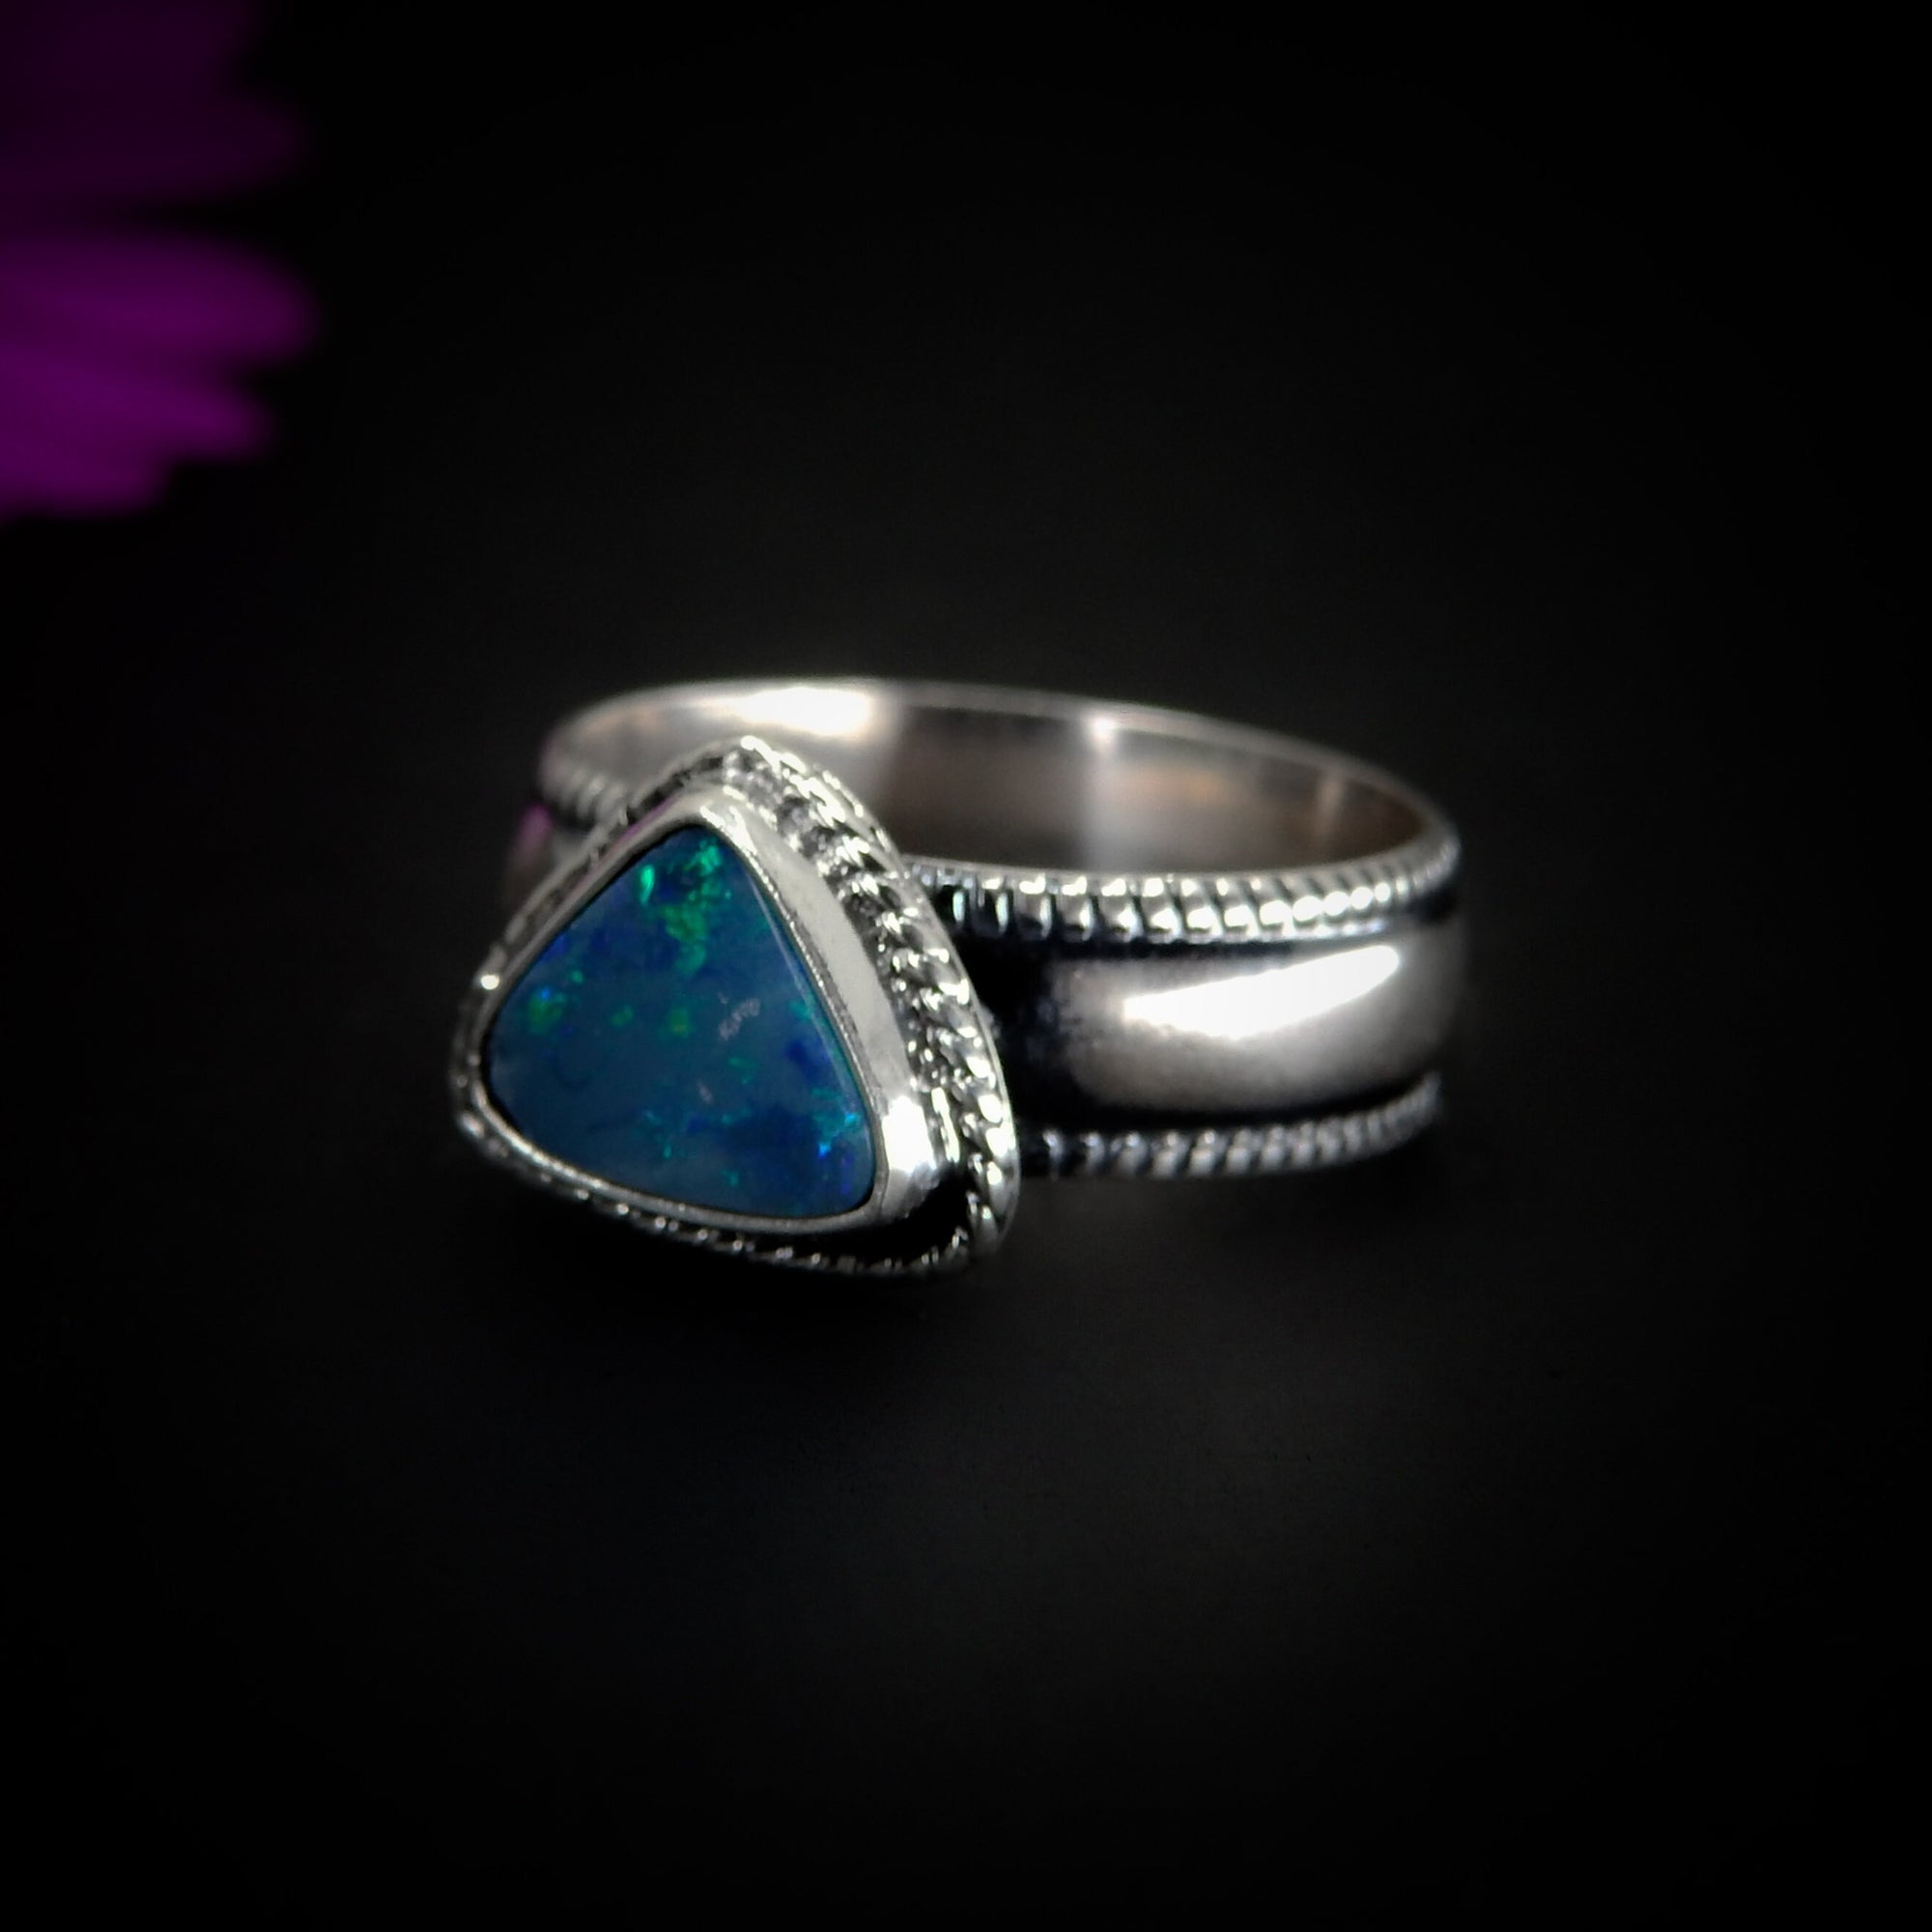 Australian Opal Ring - Size 4 1/2 - Sterling Silver - Lightning Ridge Opal Ring - Rainbow Opal Jewelry - Triangle Blue Opal OOAK, Thick Band